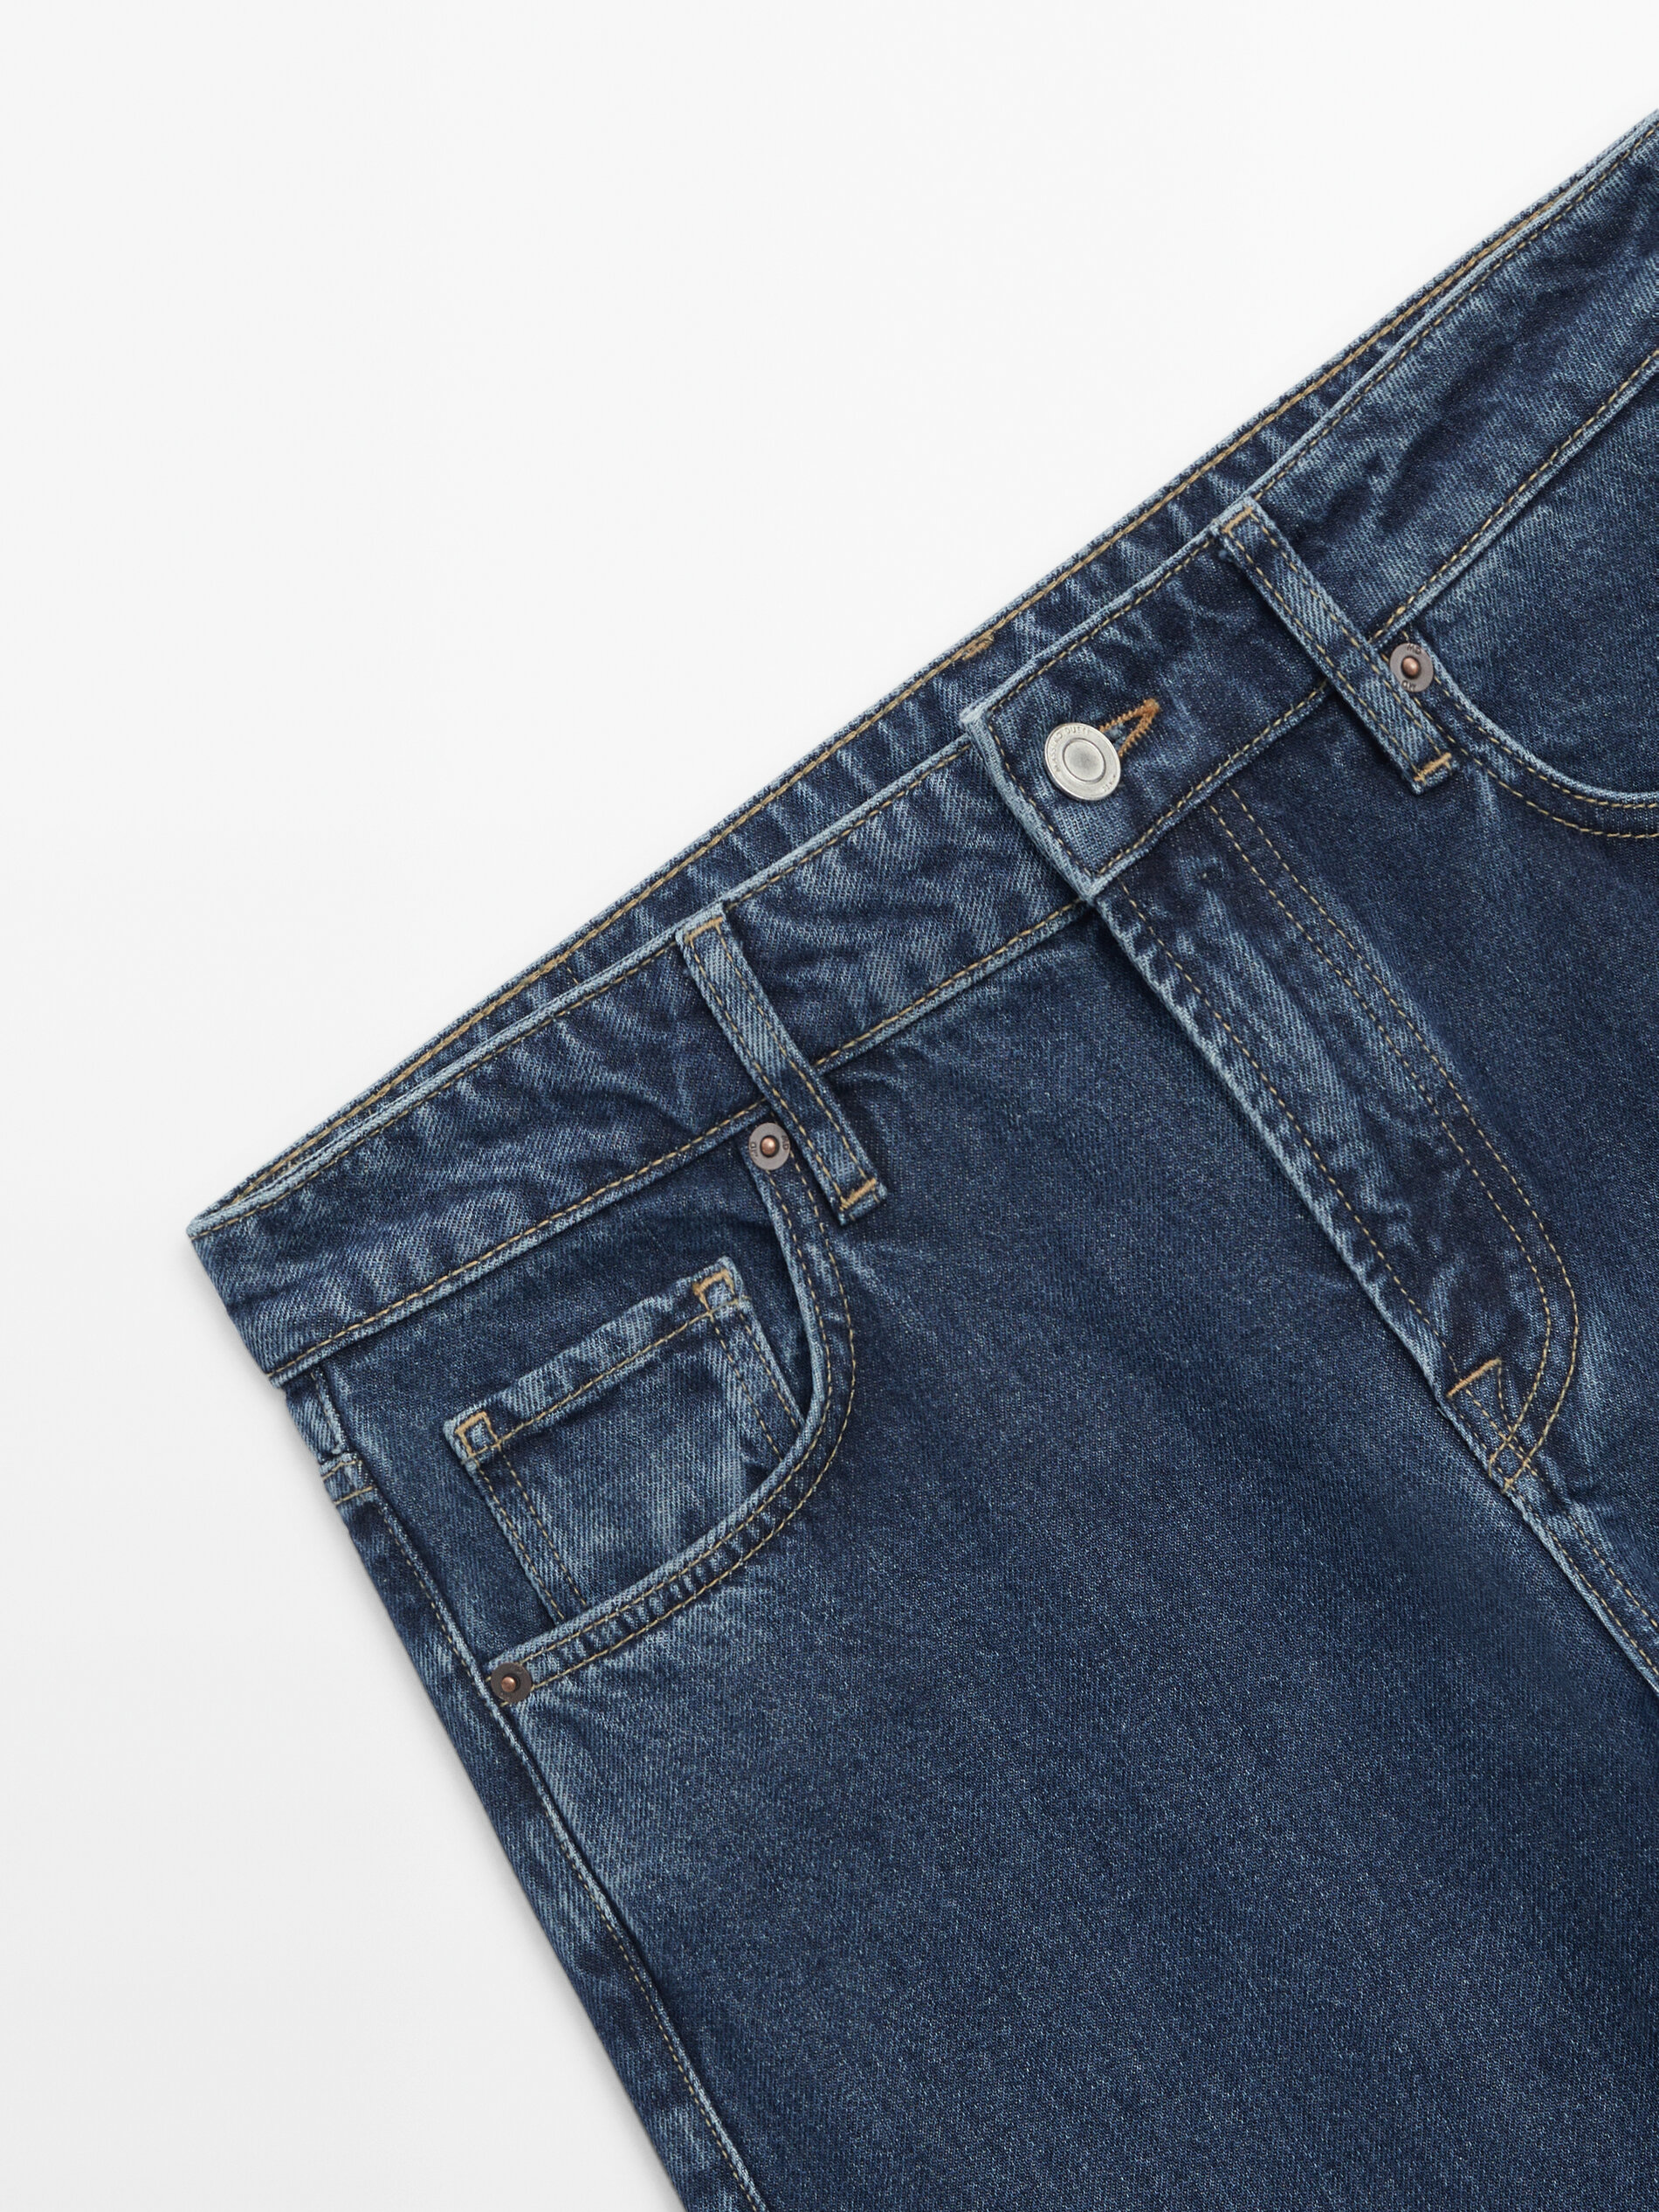 Jeans tiro bajo straight fit regular length